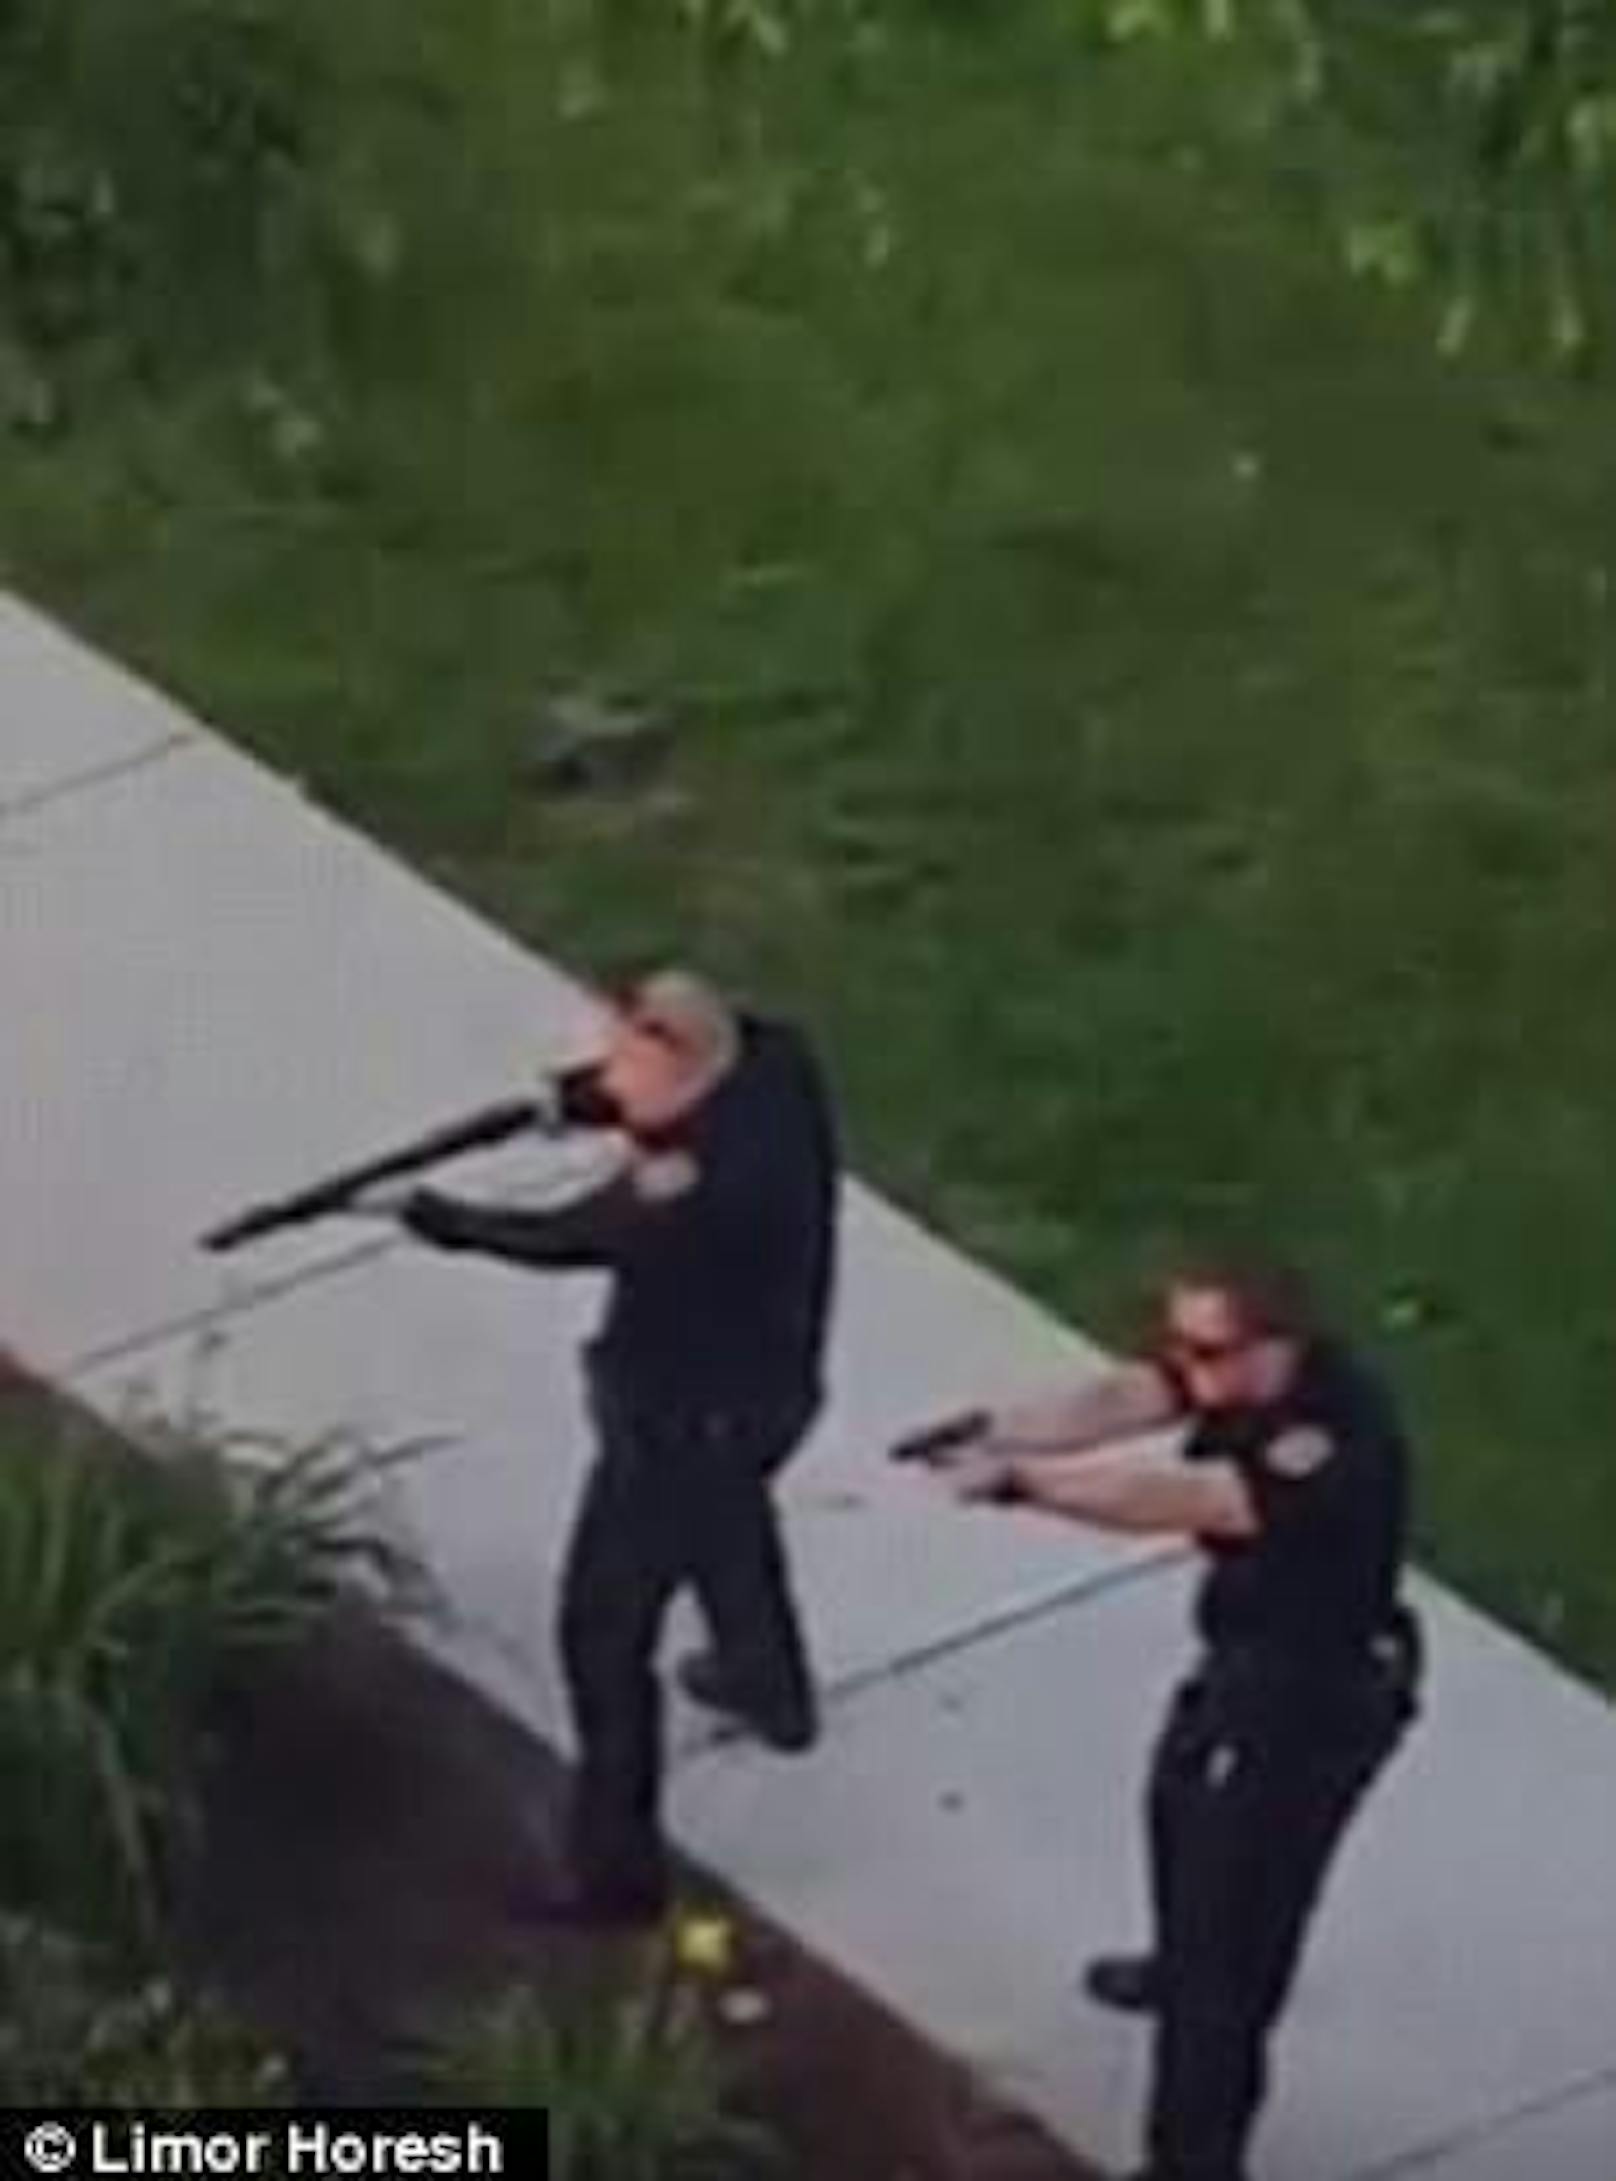 Waffe weg! Die US-Cops stellen den Amokschützen. Da der Täter die Pistole nicht weglegt, wird er erschossen.